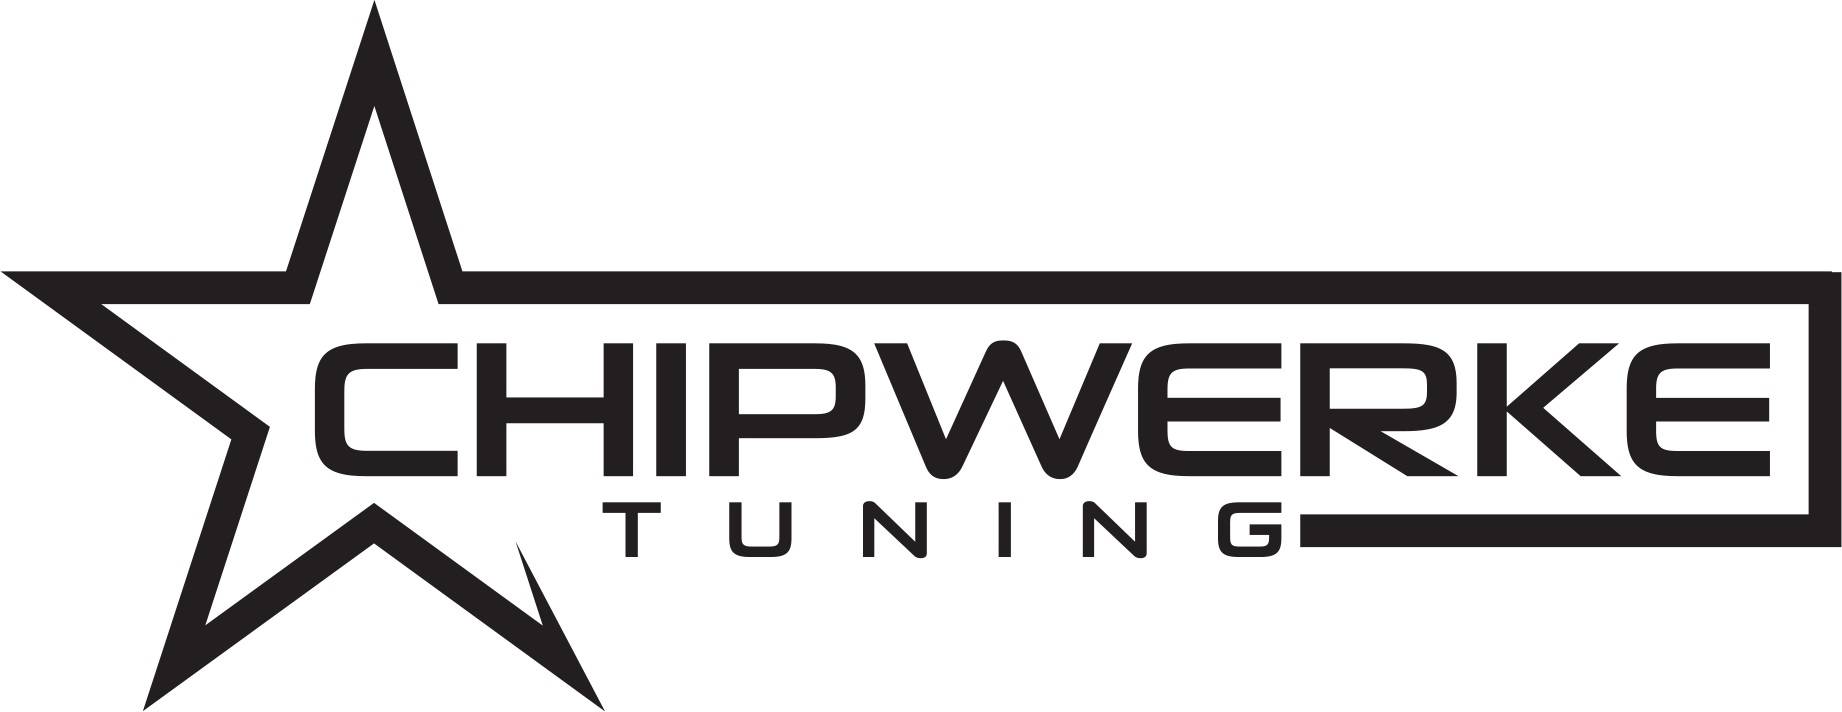 chipwerke logo